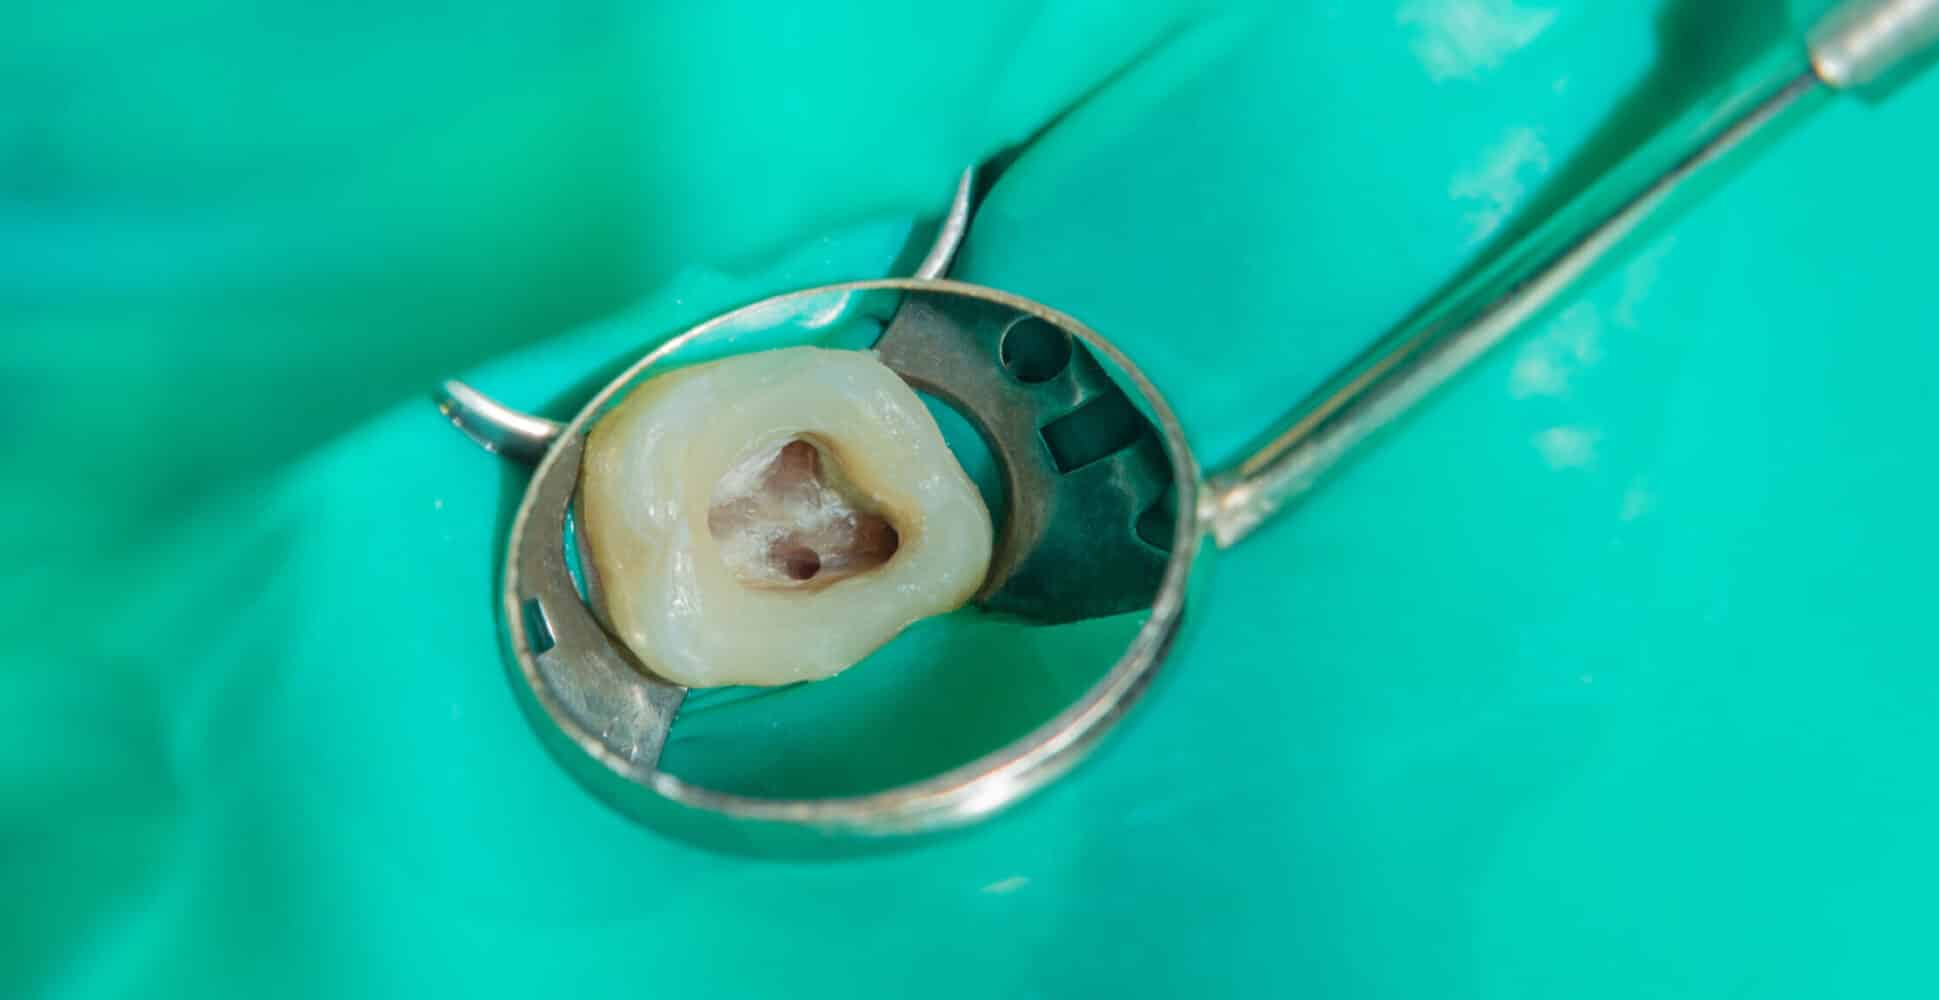 endodontic treatment of teeth close-up.